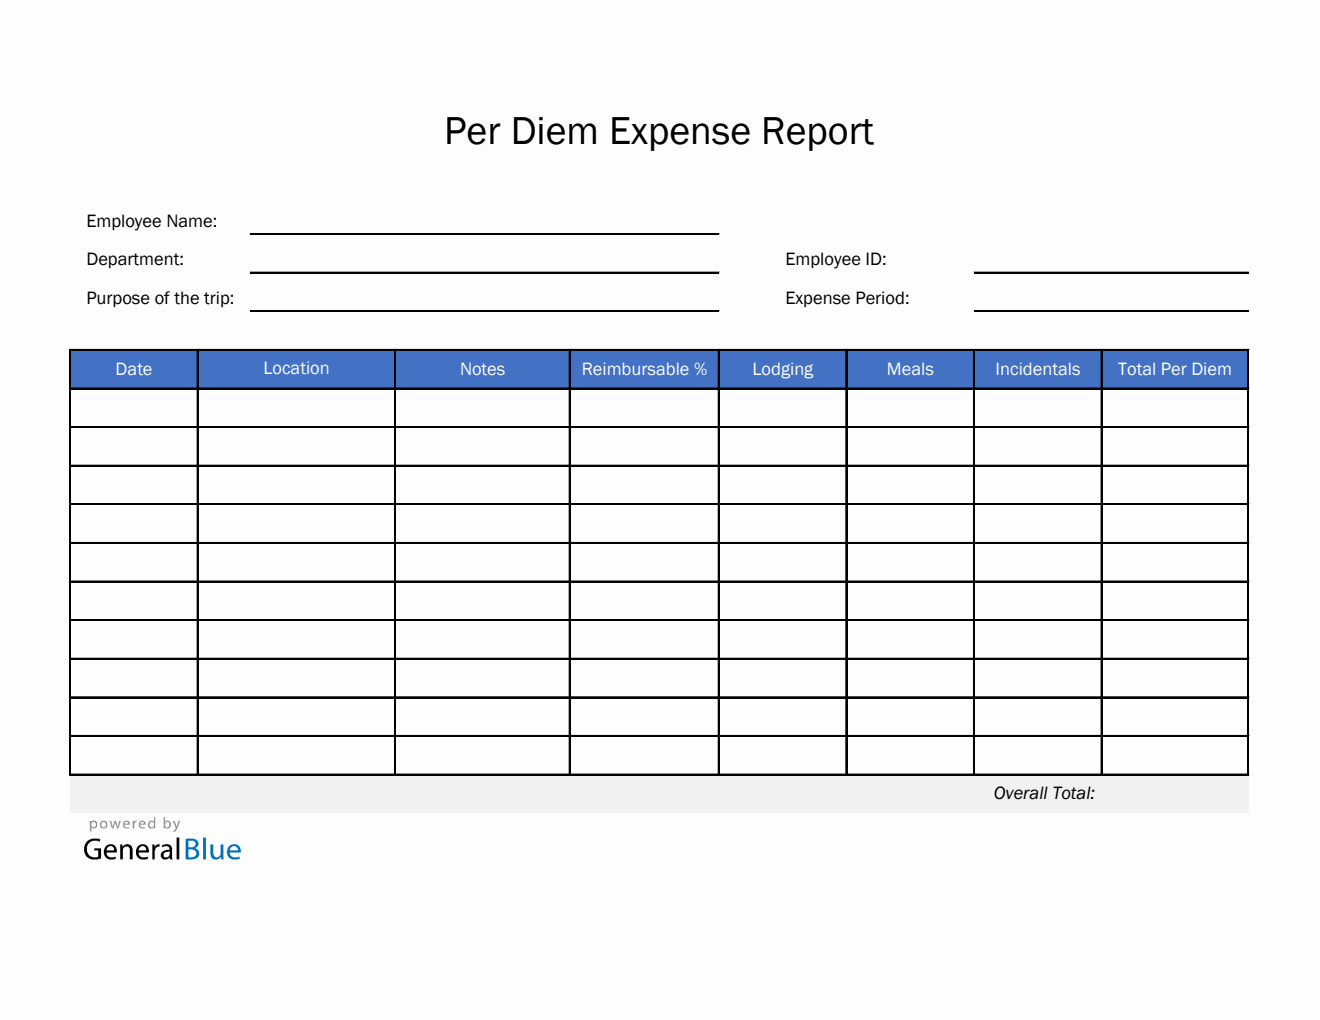 Per Diem Expense Report Template in Excel (Blue)